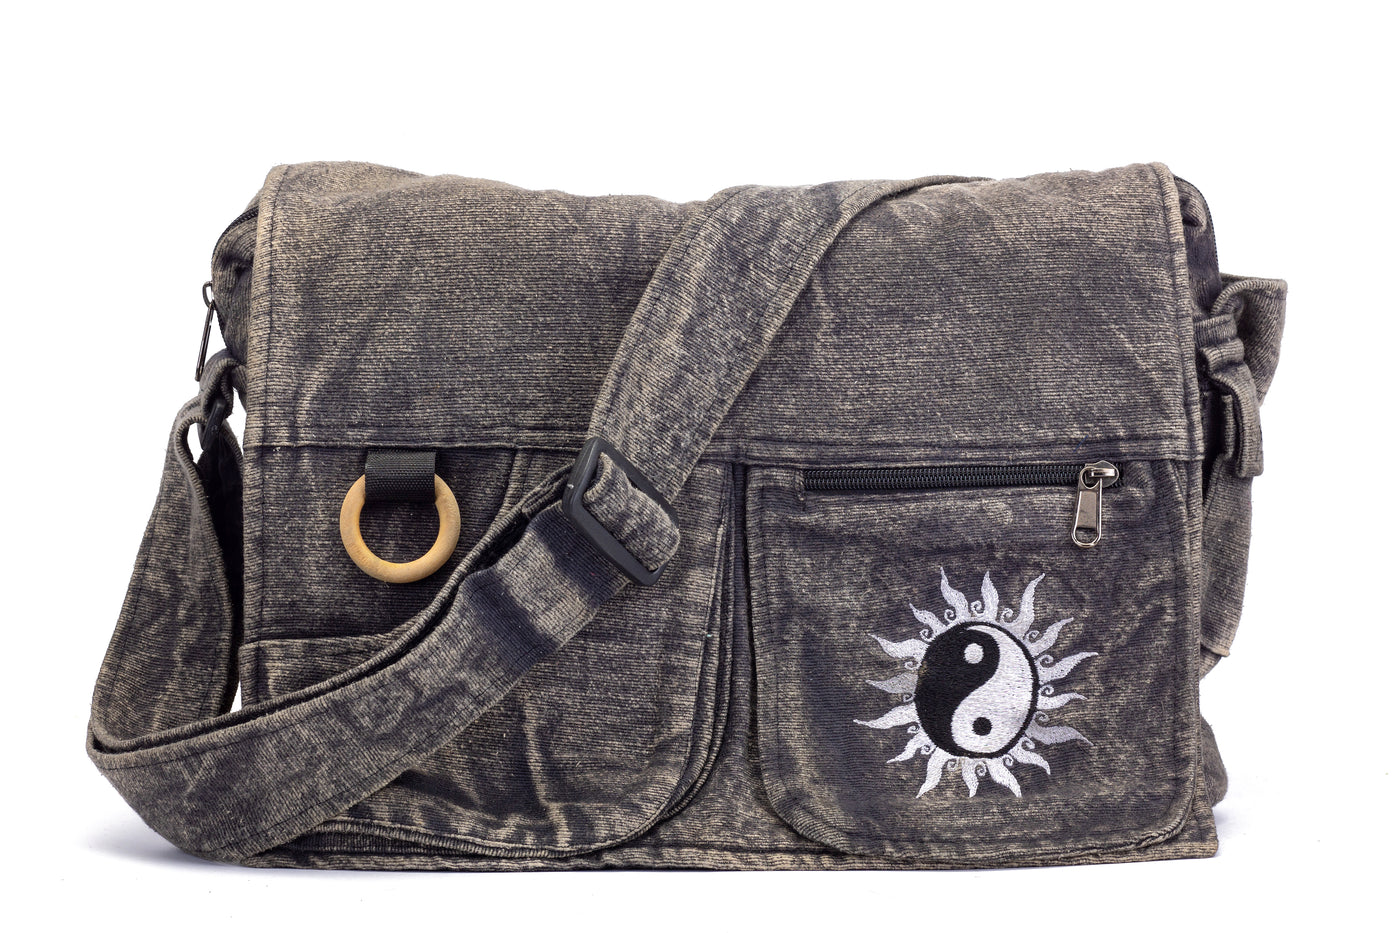 Koshi Black Stone-Washed Embroidered Laptop Messenger Bag